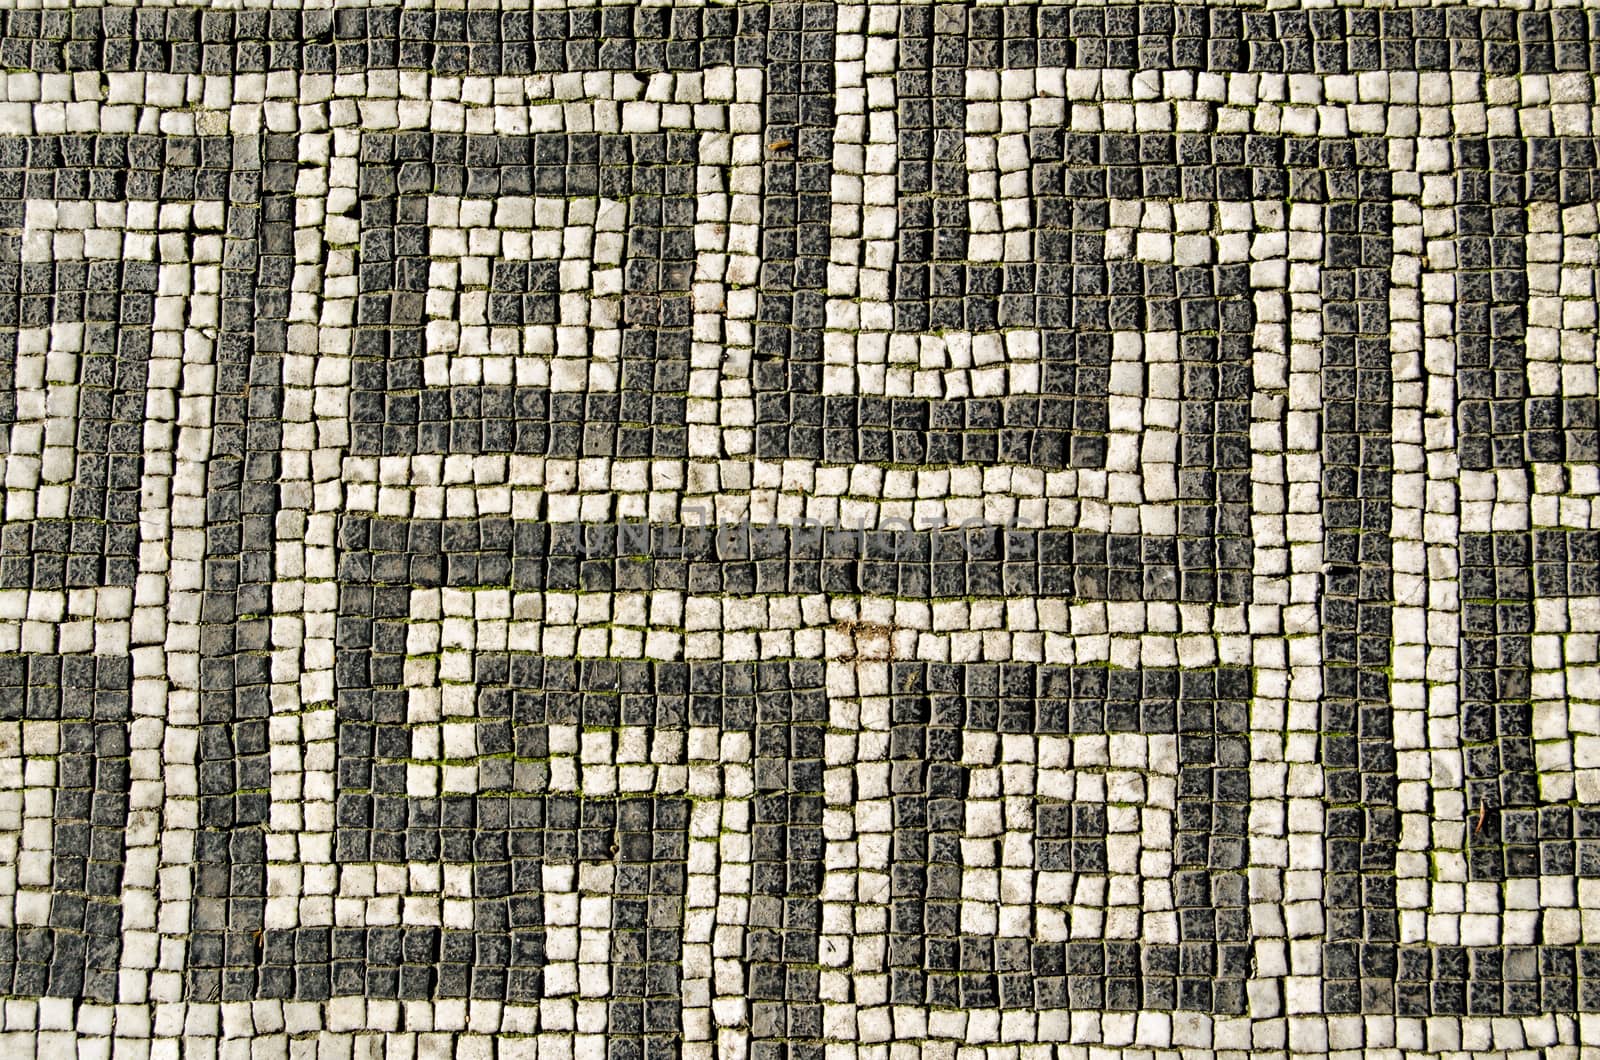 Greek key mosaic by BasPhoto